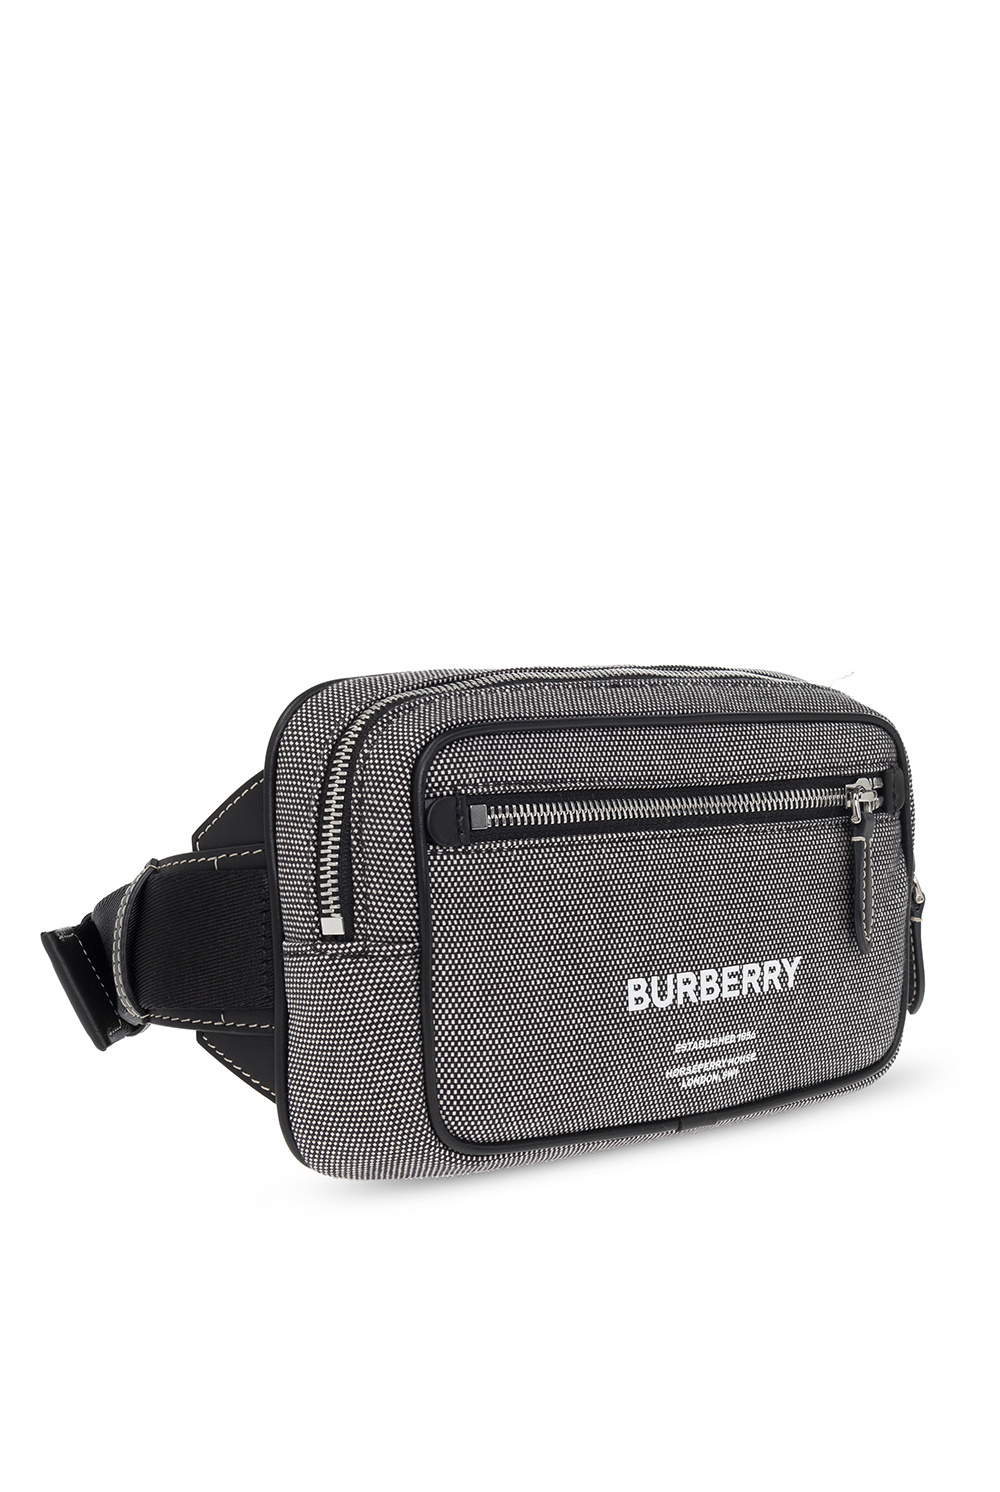 burberry Location-print ‘West’ belt bag